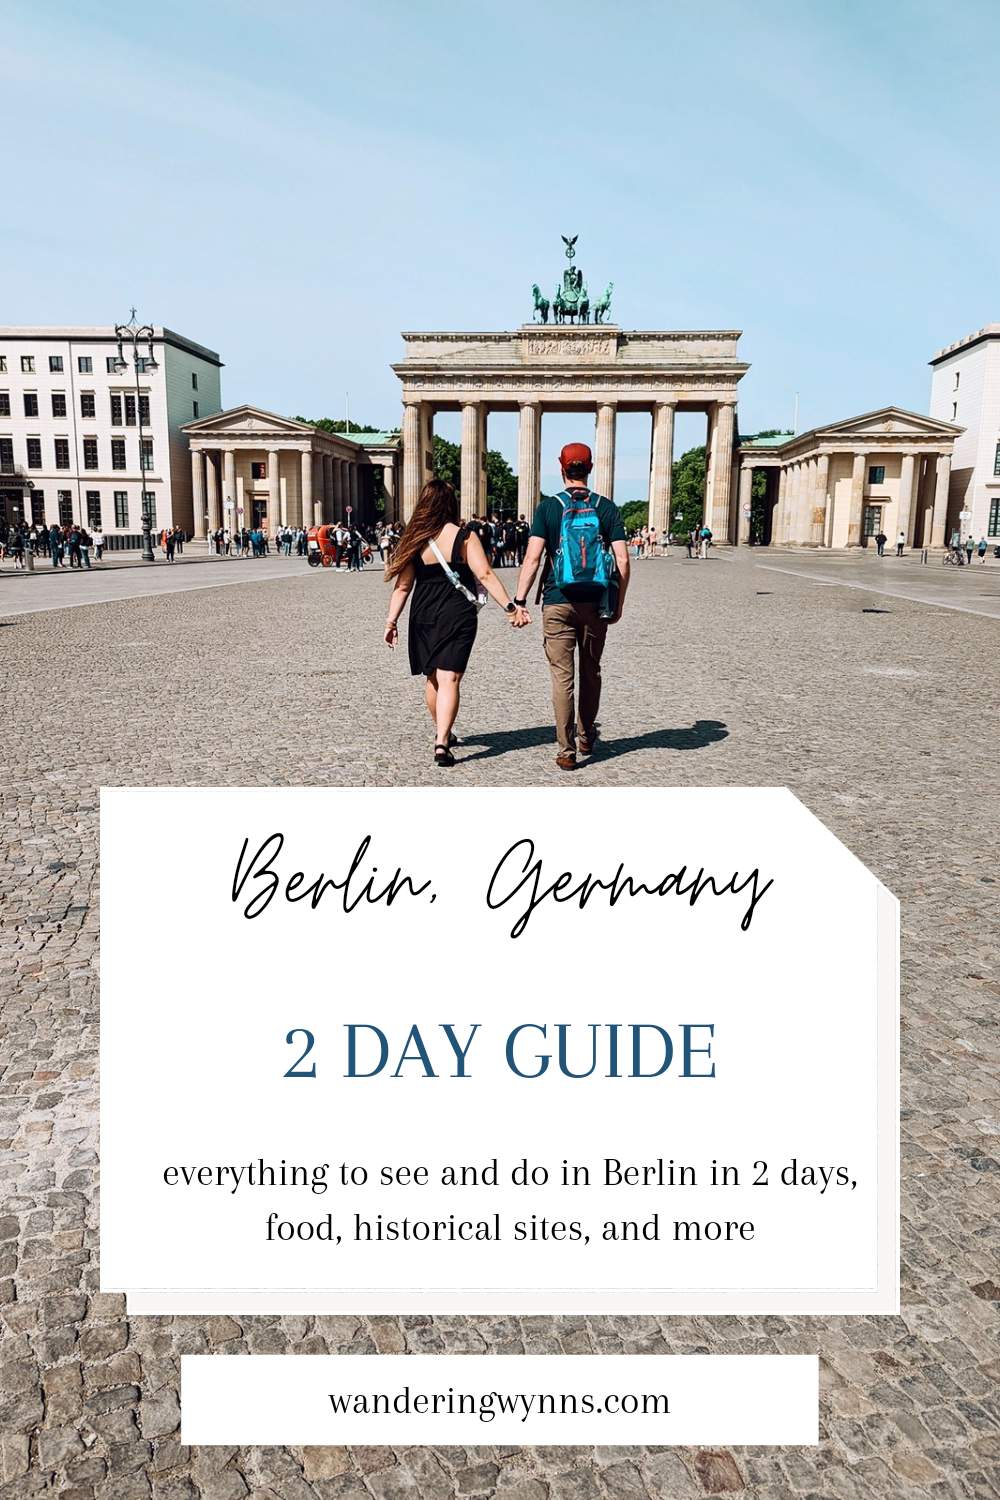 Berlin 2 Day Guide